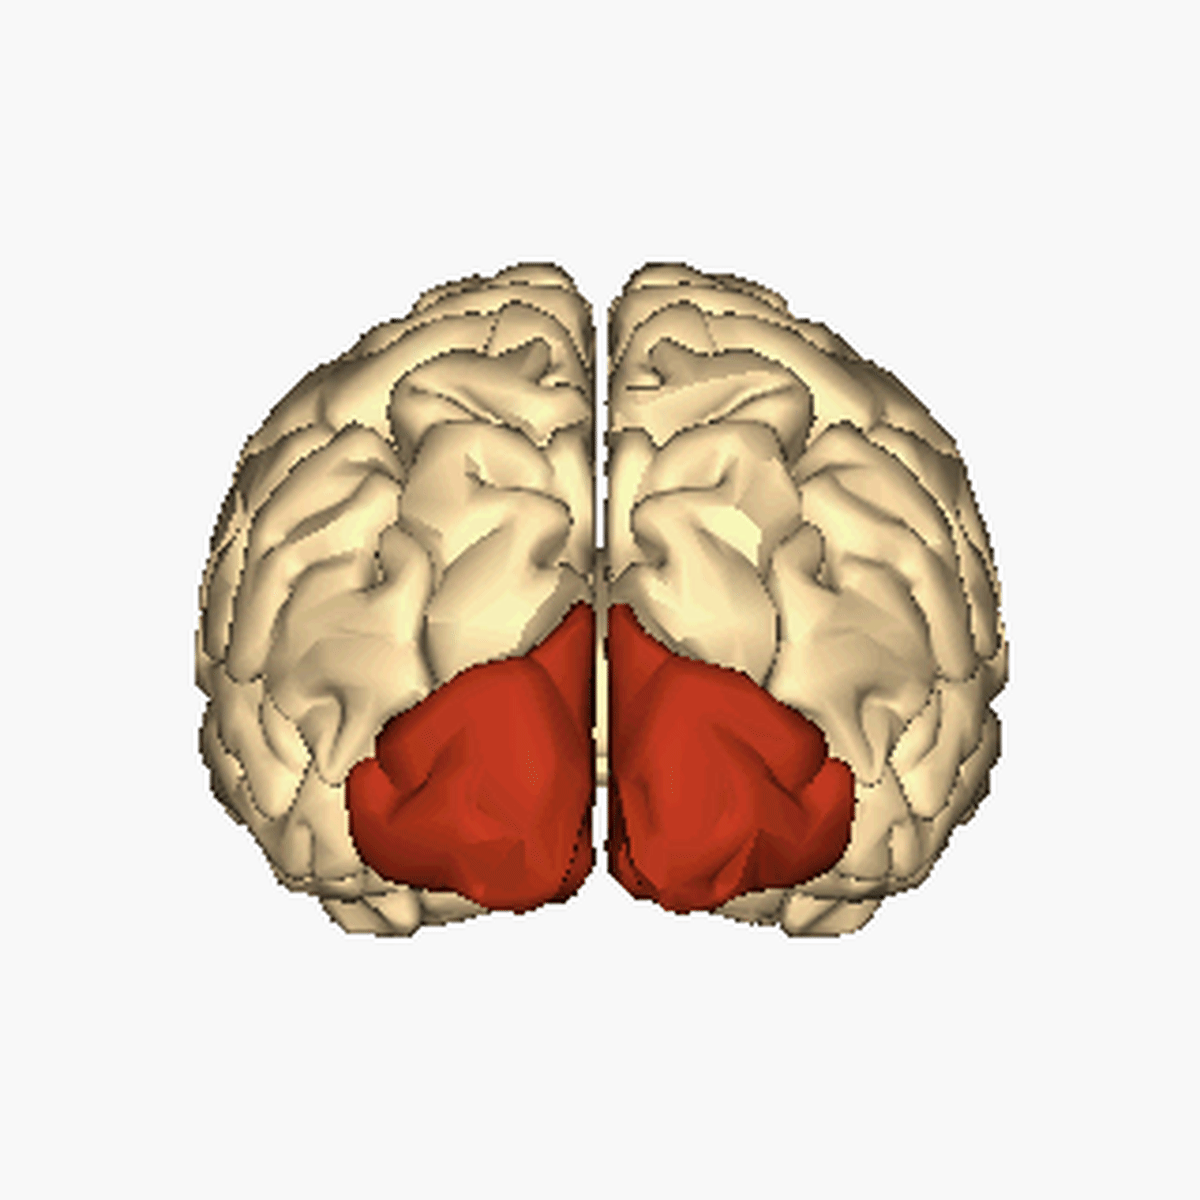 occipetal lobes in cerebral hemispheres